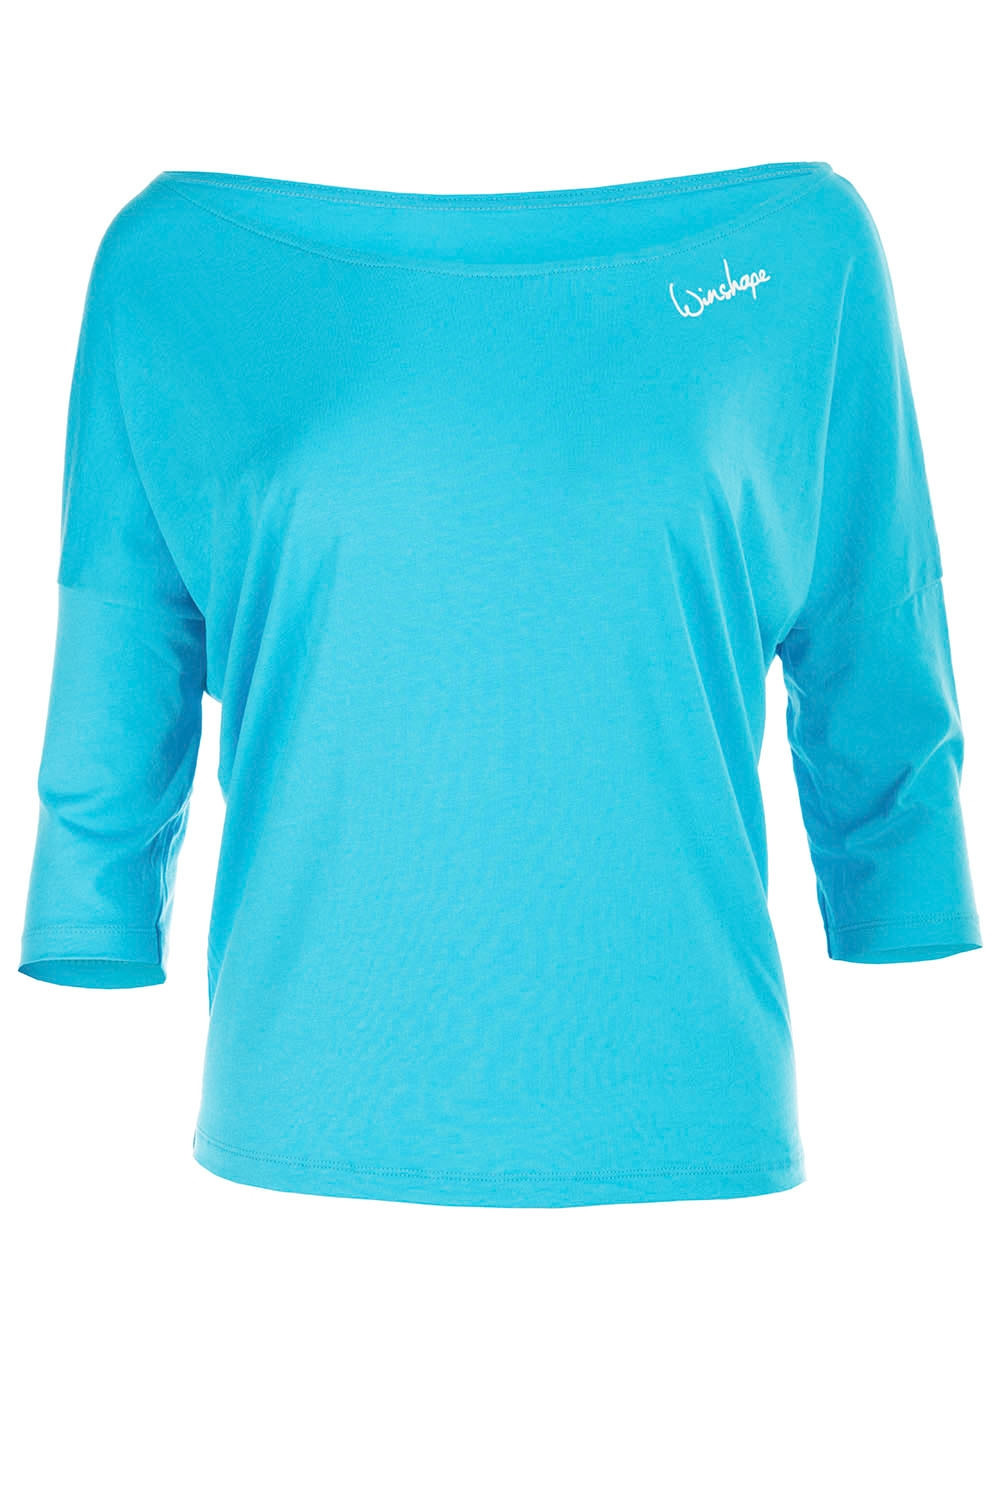 Ultra leichtes Modal-3/4-Arm Sky Winshape Blue, MCS001, Style Dance Shirt